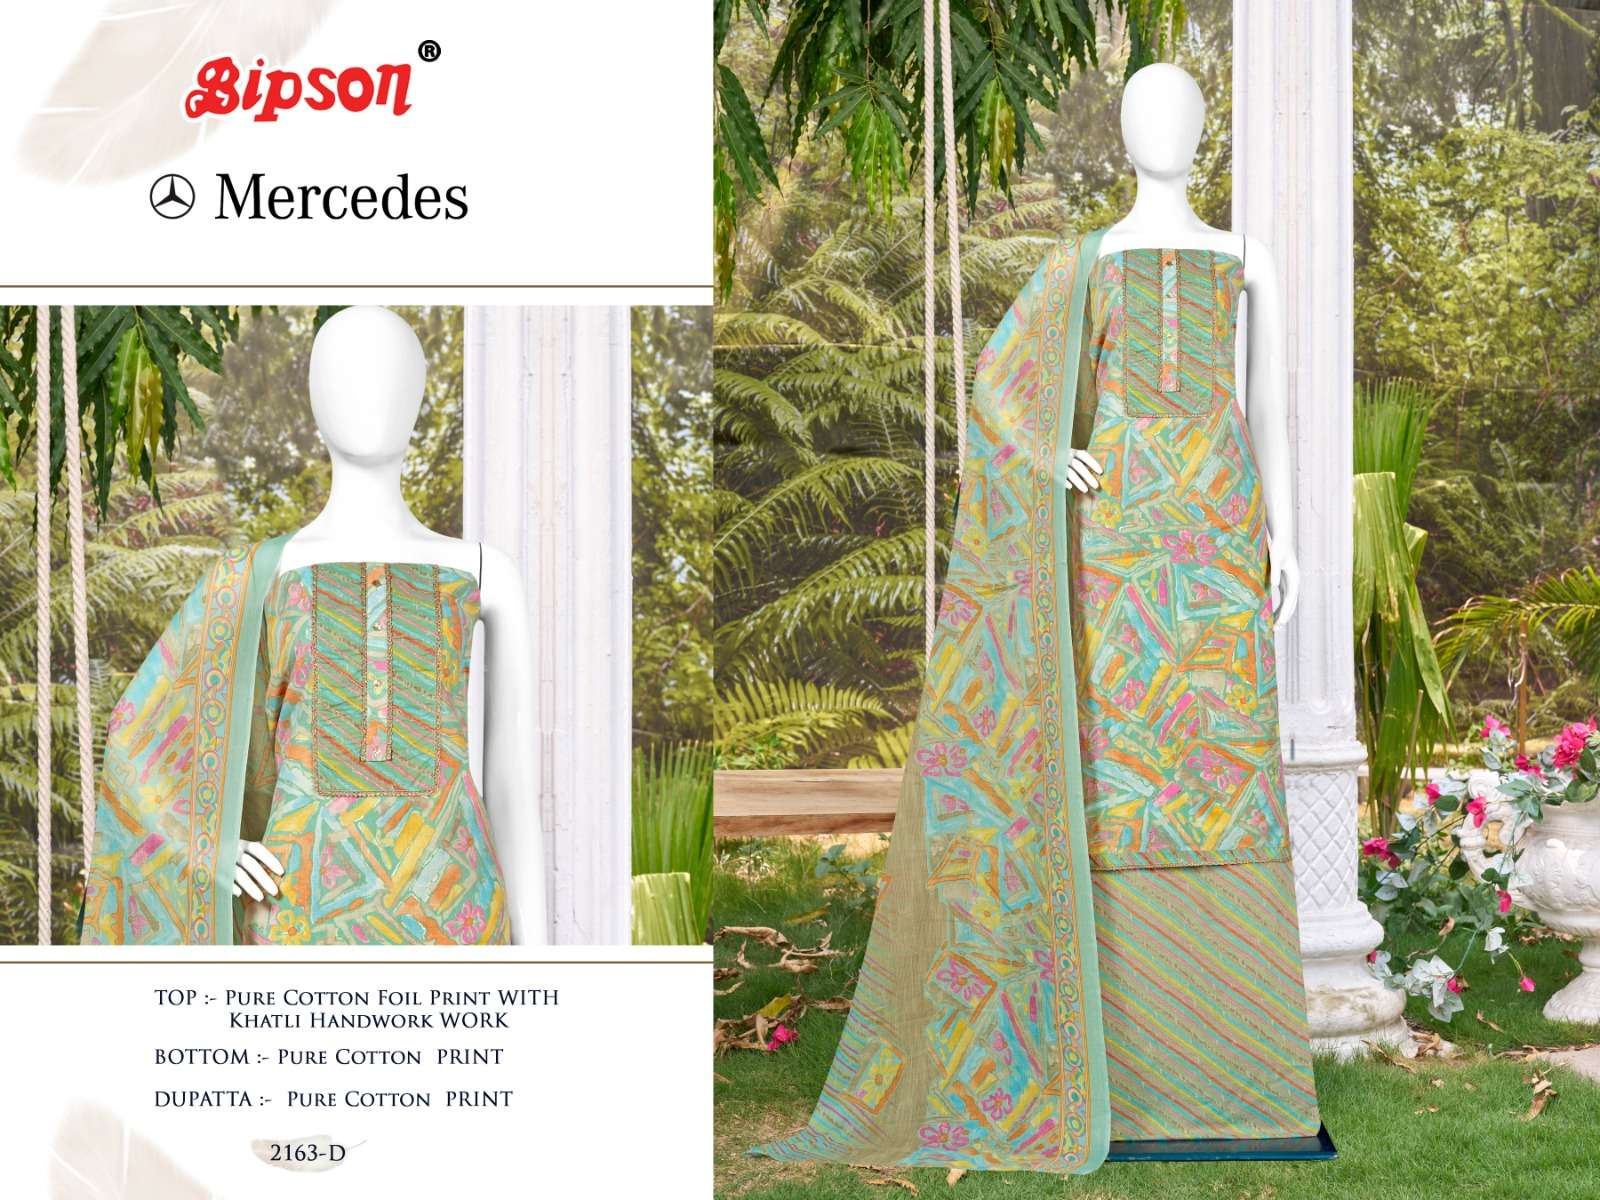 bipson prints mercedes 2163 series print with work designer dress catalogue online market surat